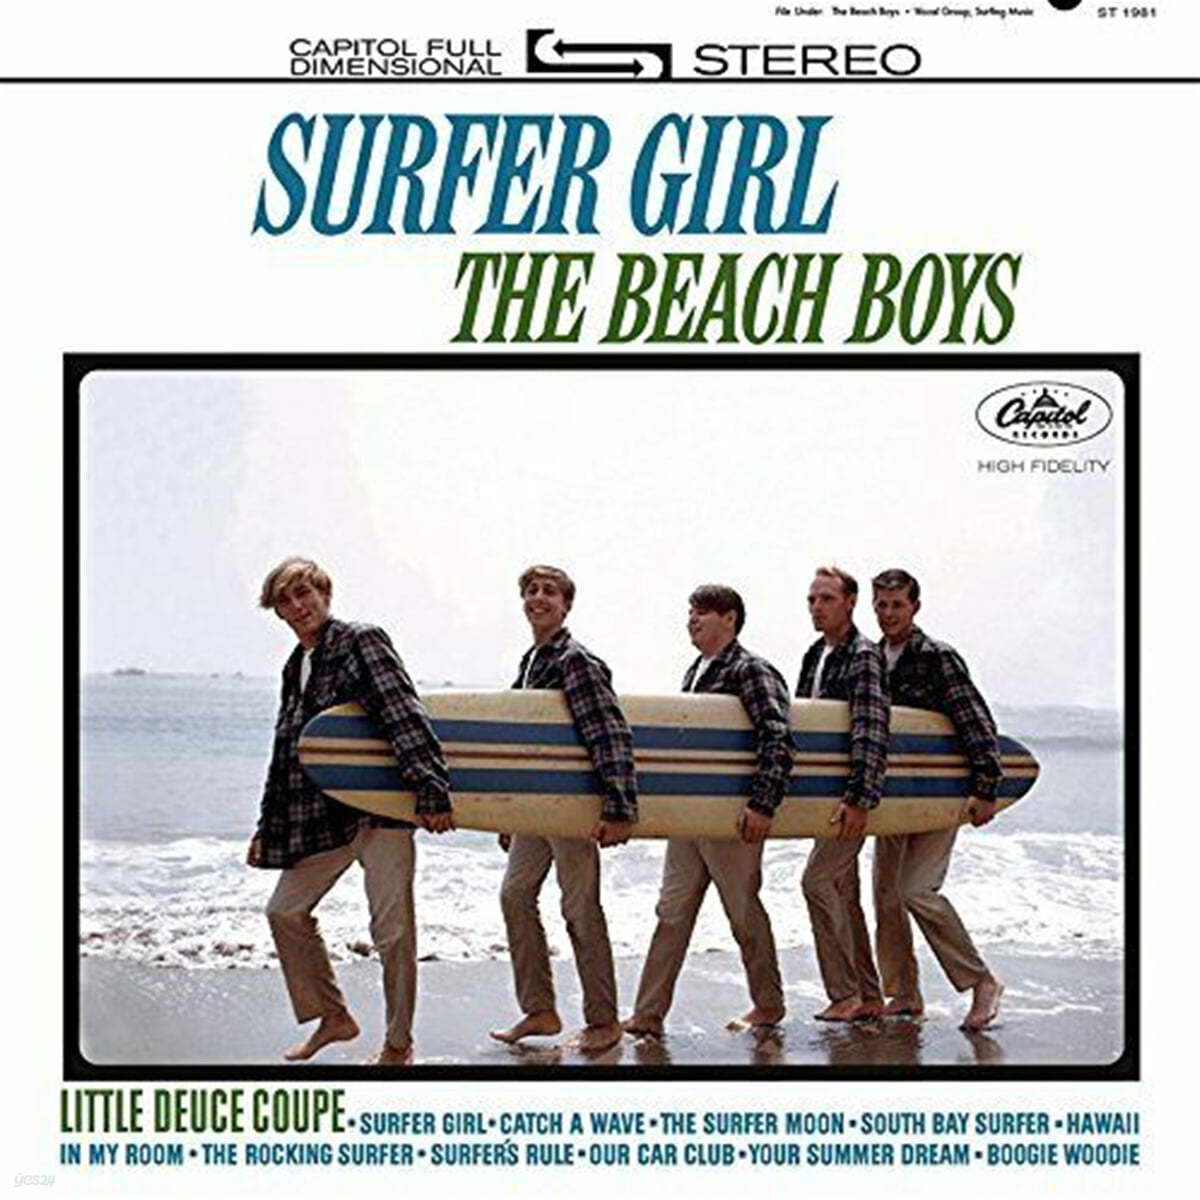 The Beach Boys (비치보이스) - Surfer Girl [2LP] 